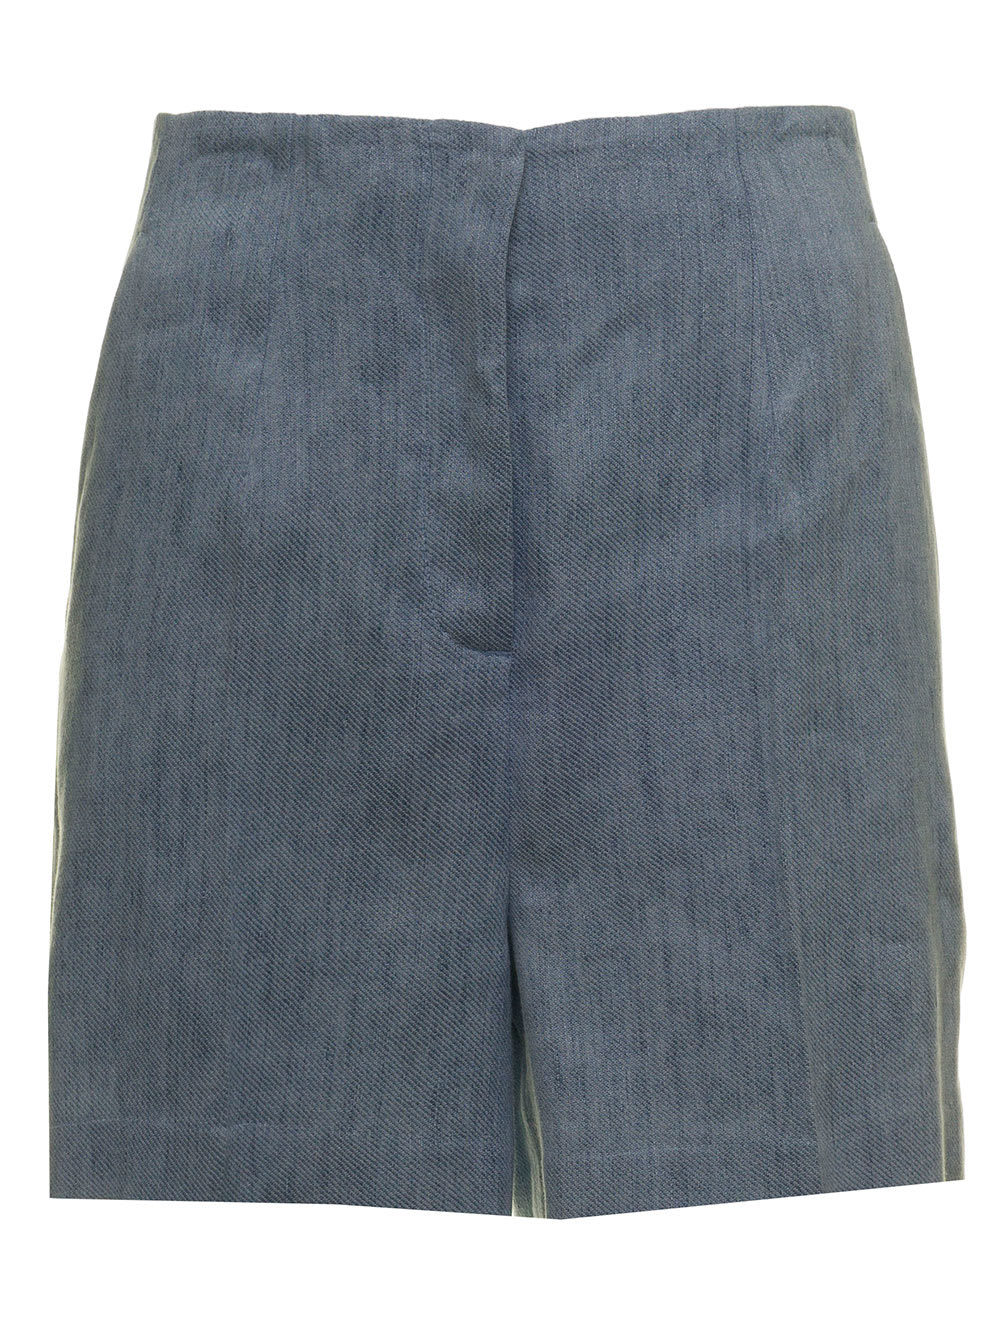 TwinSet Twin Set Womans Light Blue Cotton And Linen Shorts